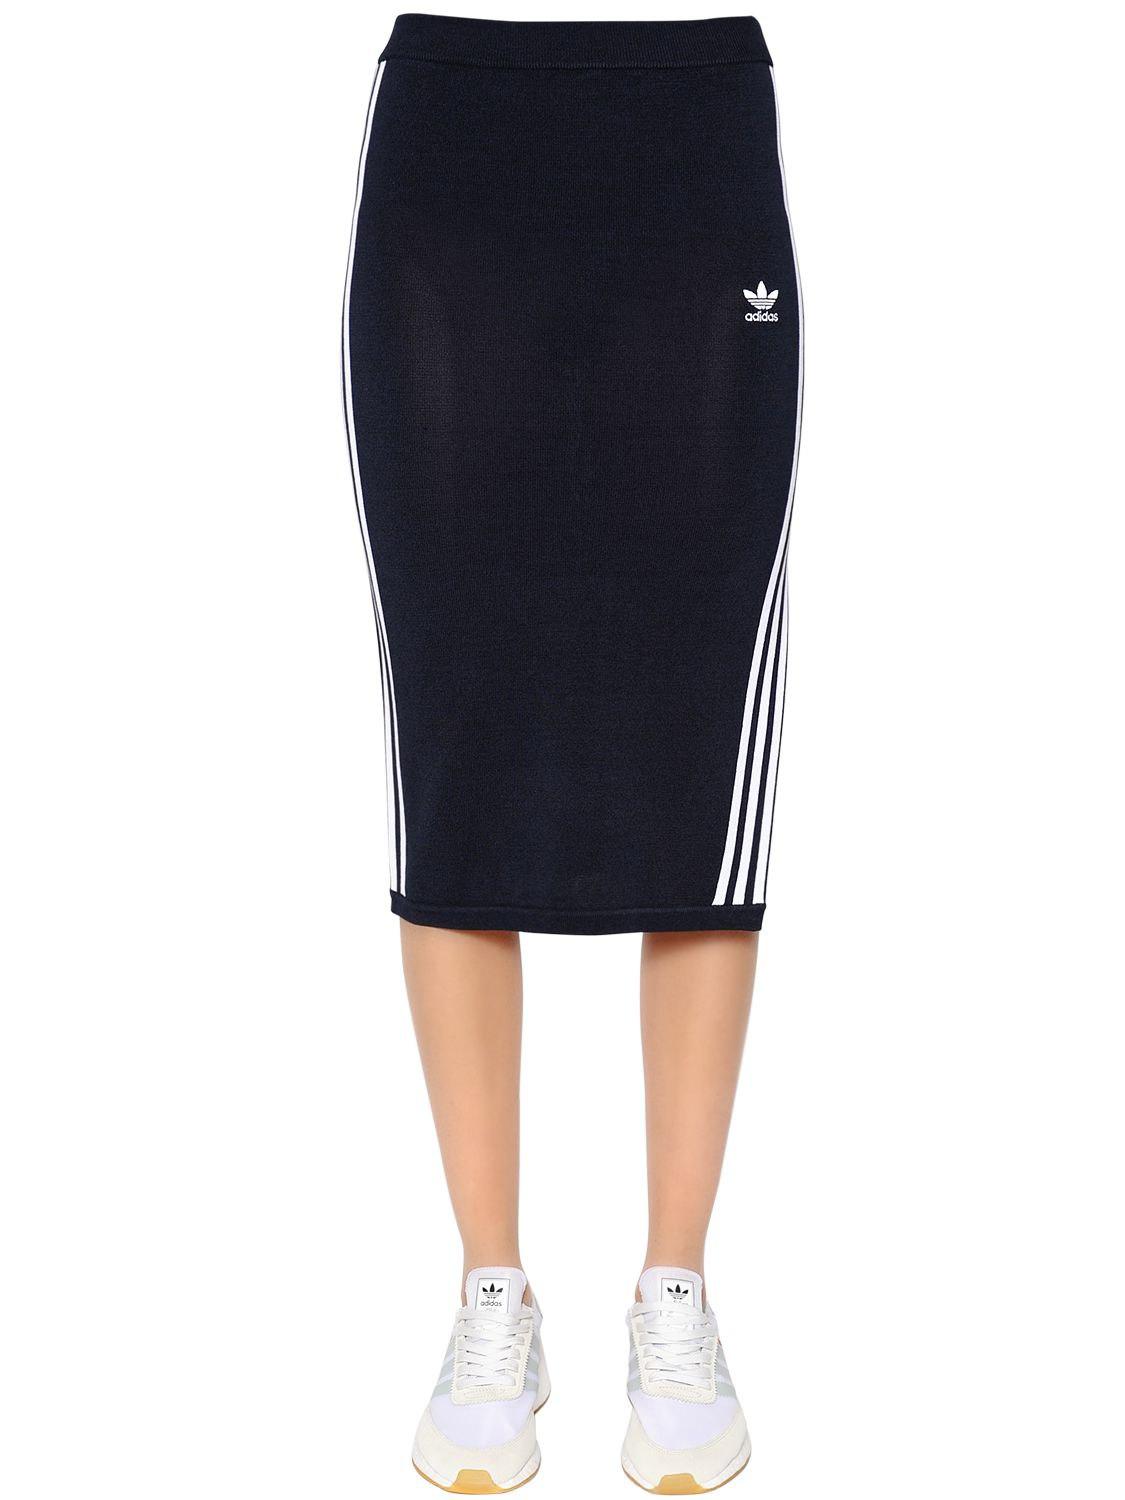 adidas Originals 3 Stripes Knit Midi Skirt in Navy (Blue) - Lyst